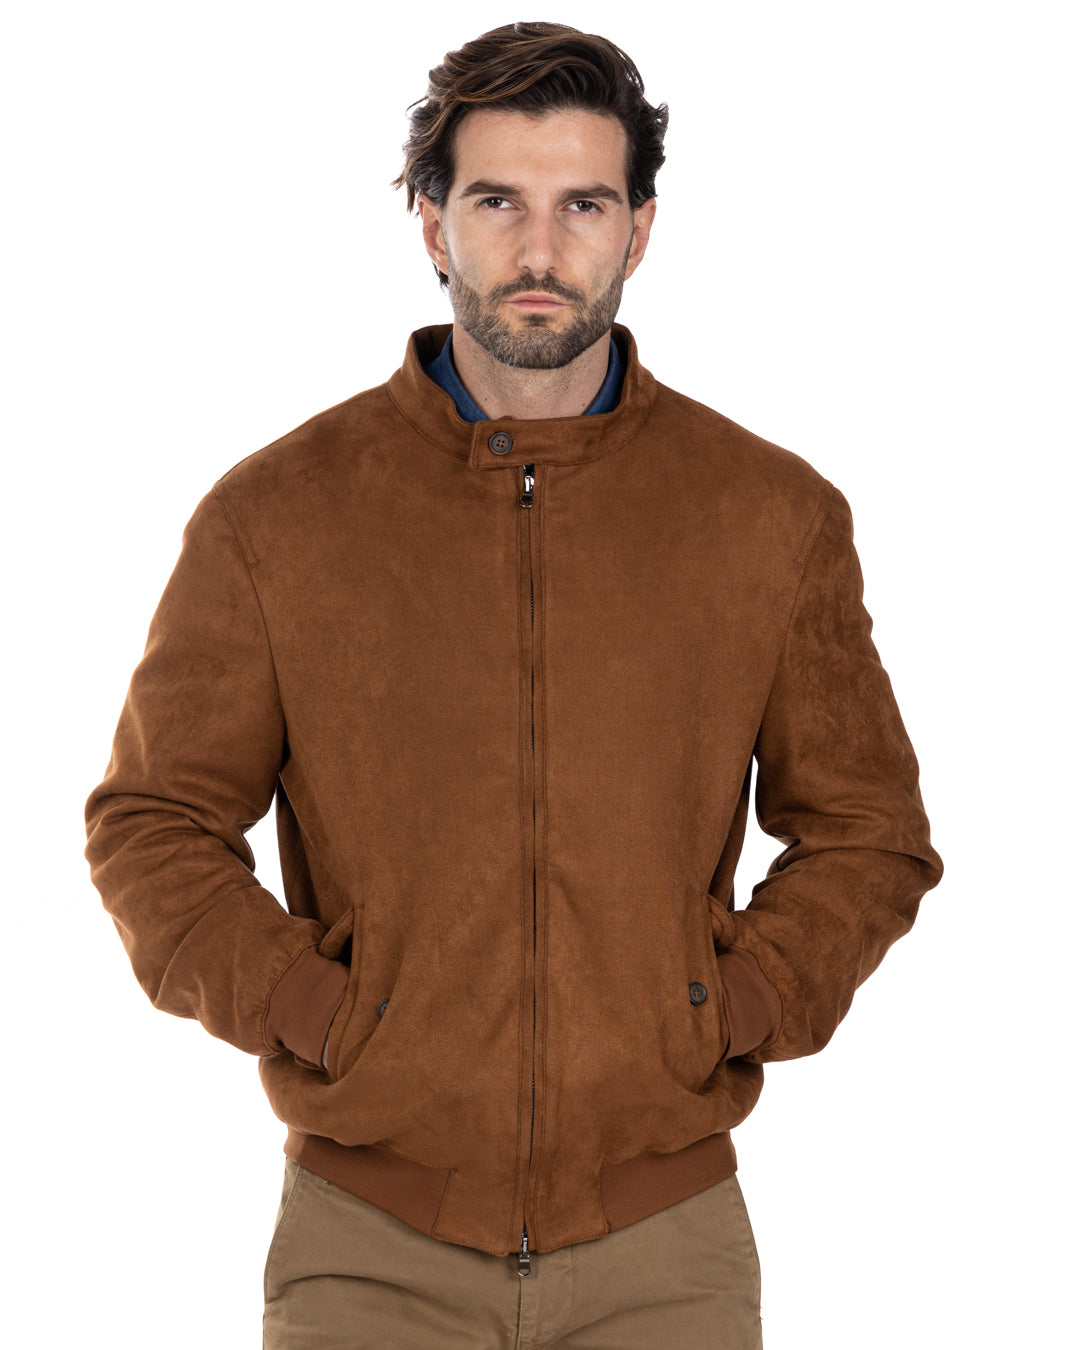 Alis - camel eco-suede jacket with zip